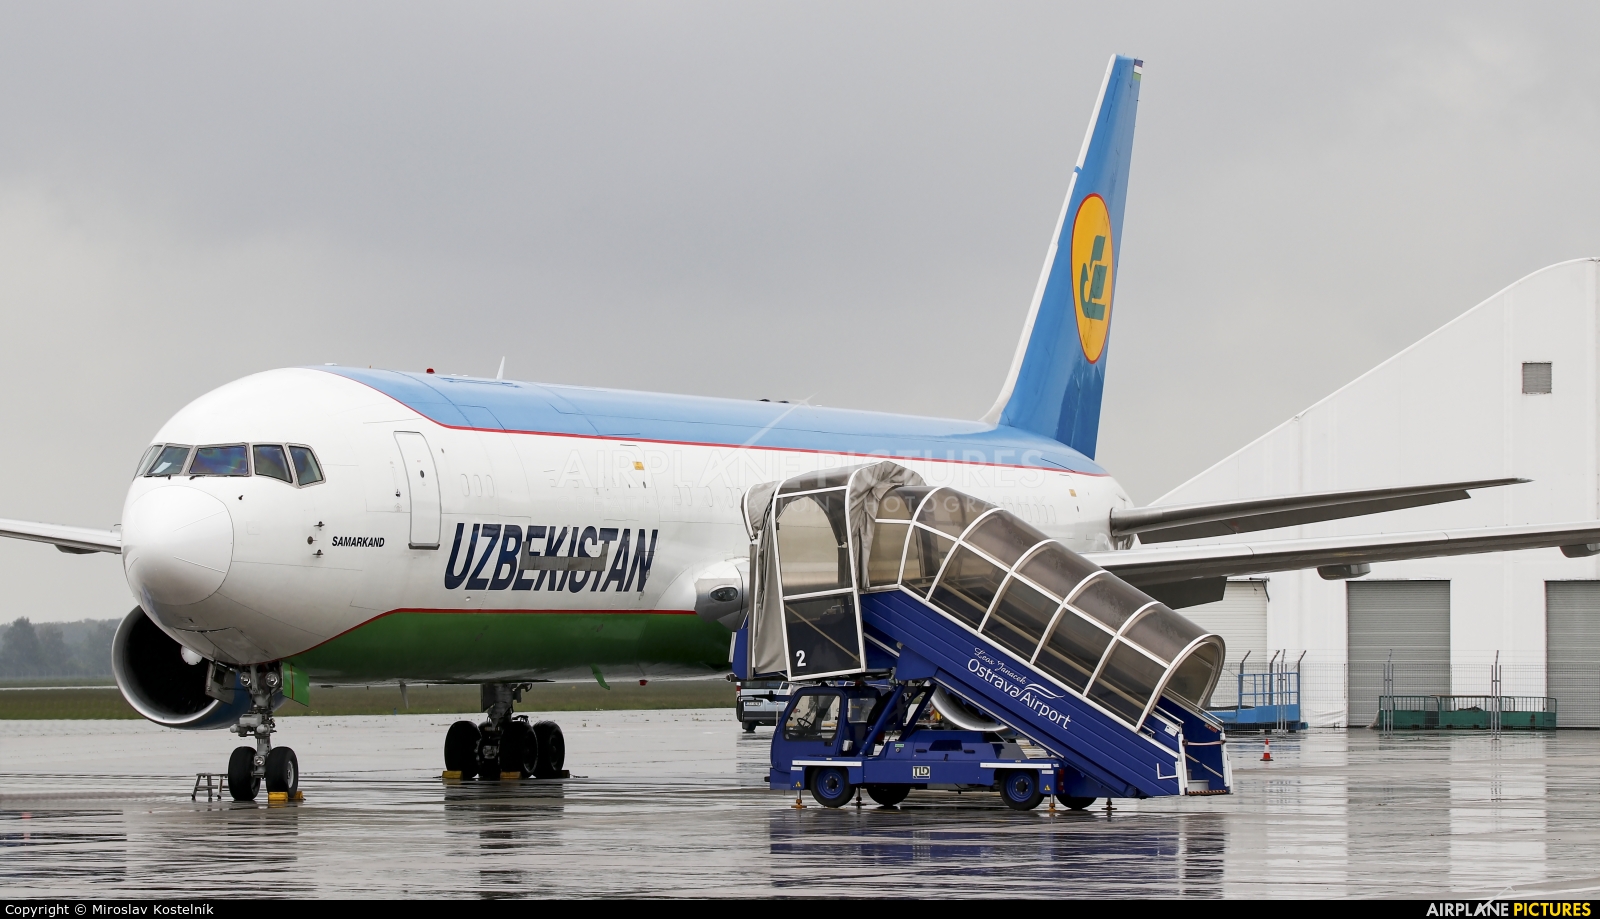 Uzbekistan Airways UK67001 aircraft at Ostrava Mošnov